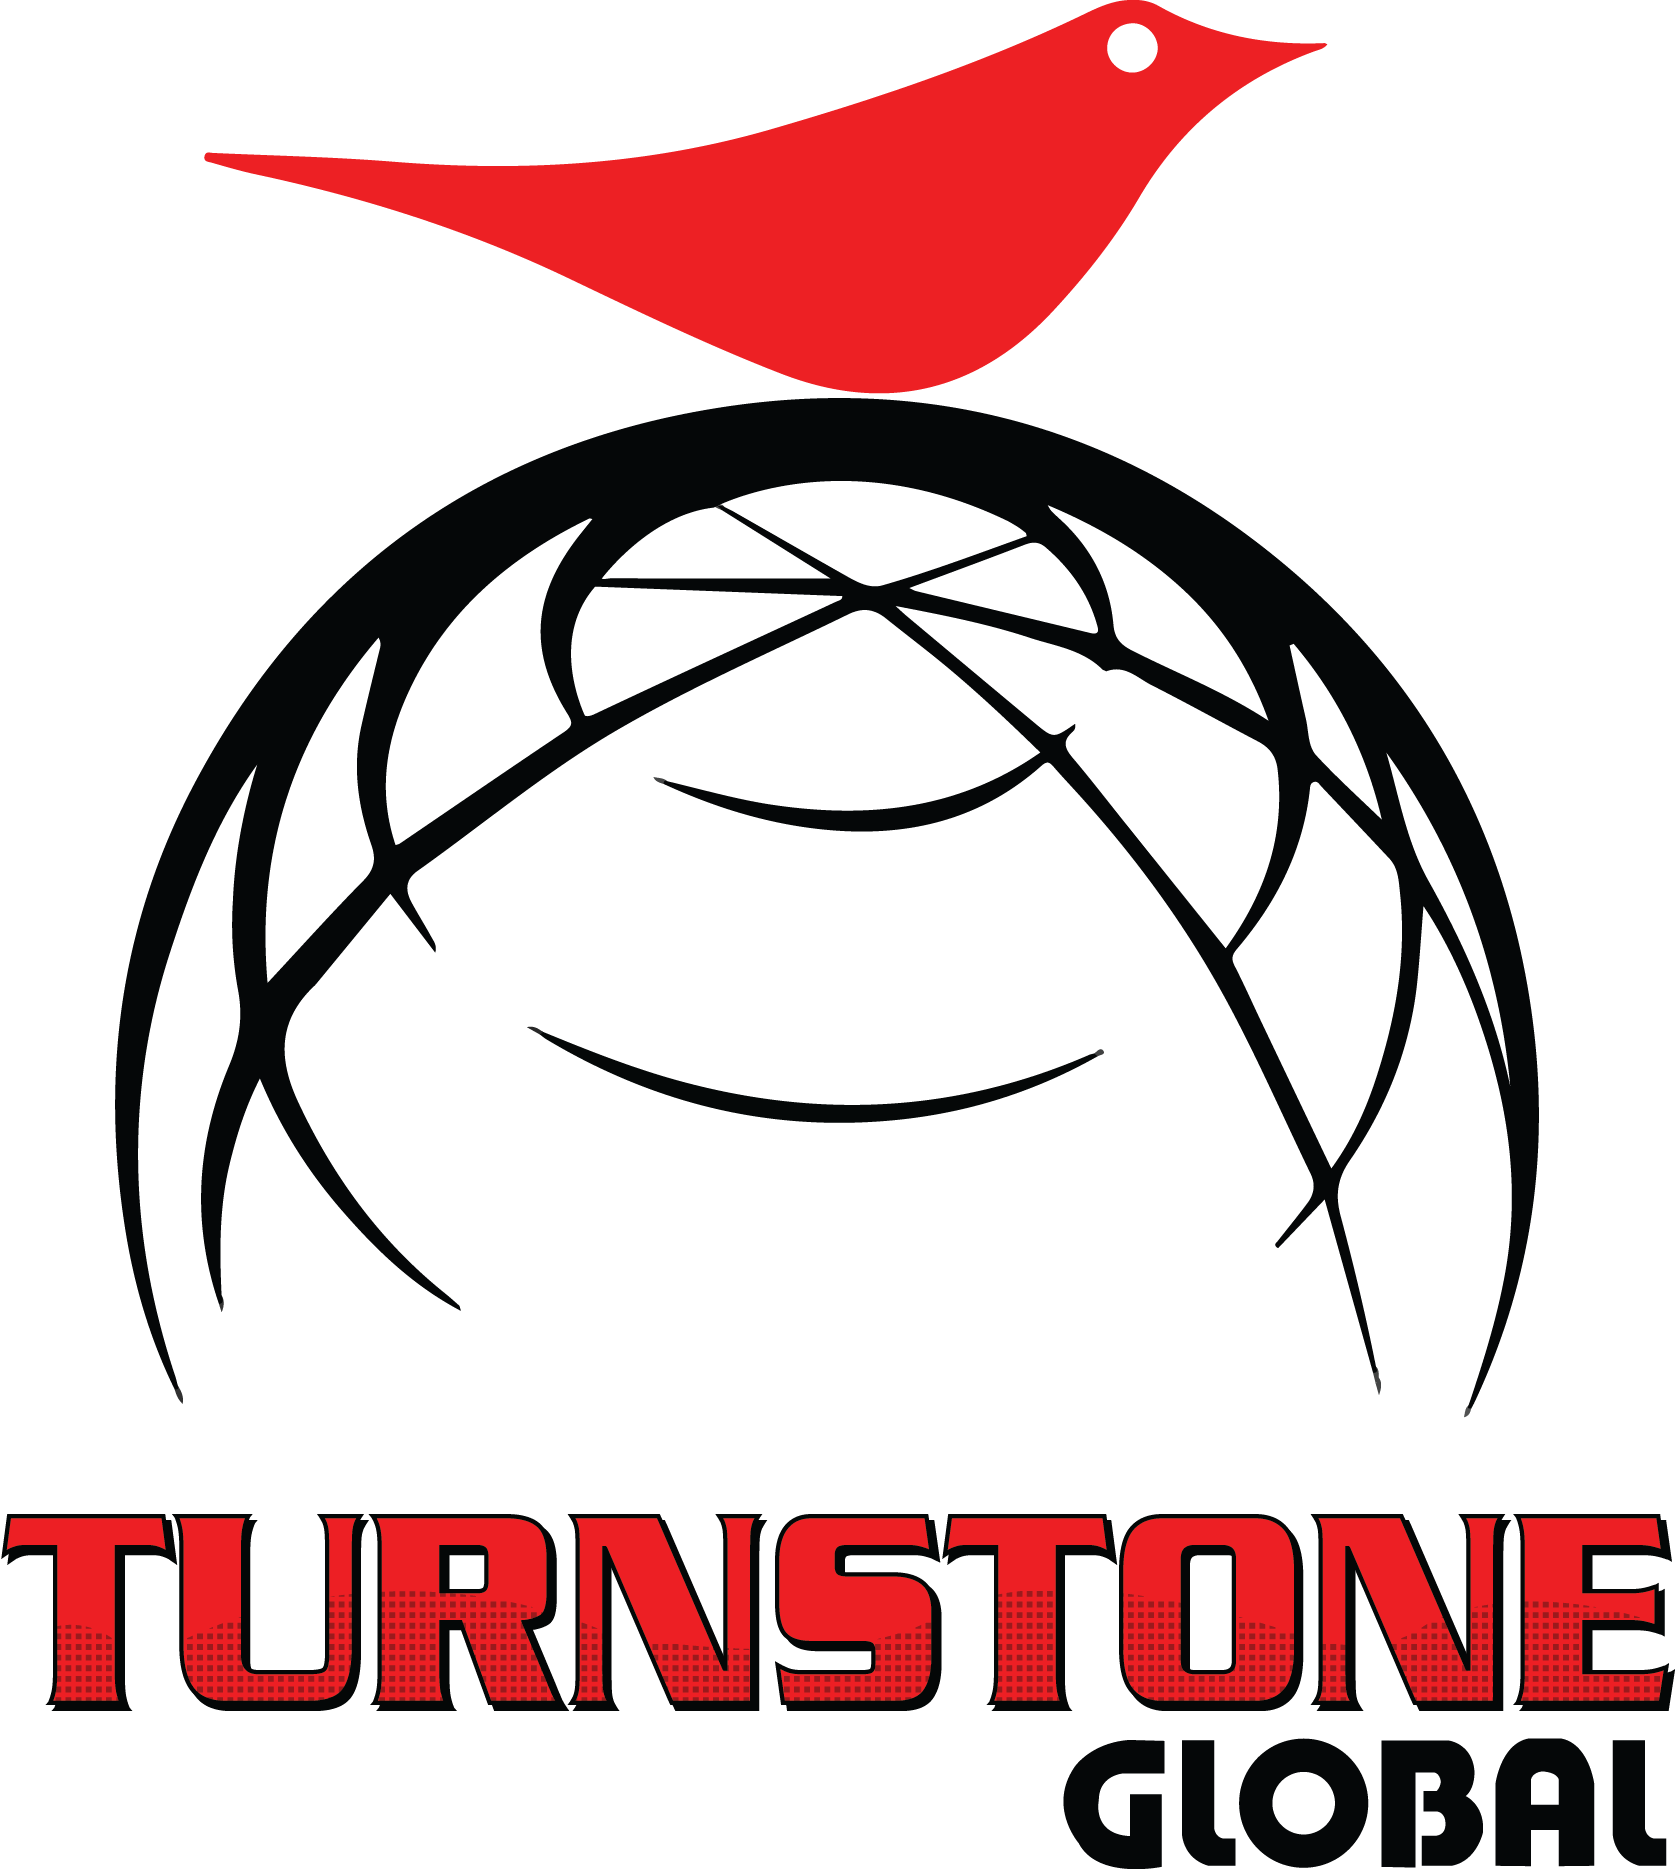 Turnstone Global logo